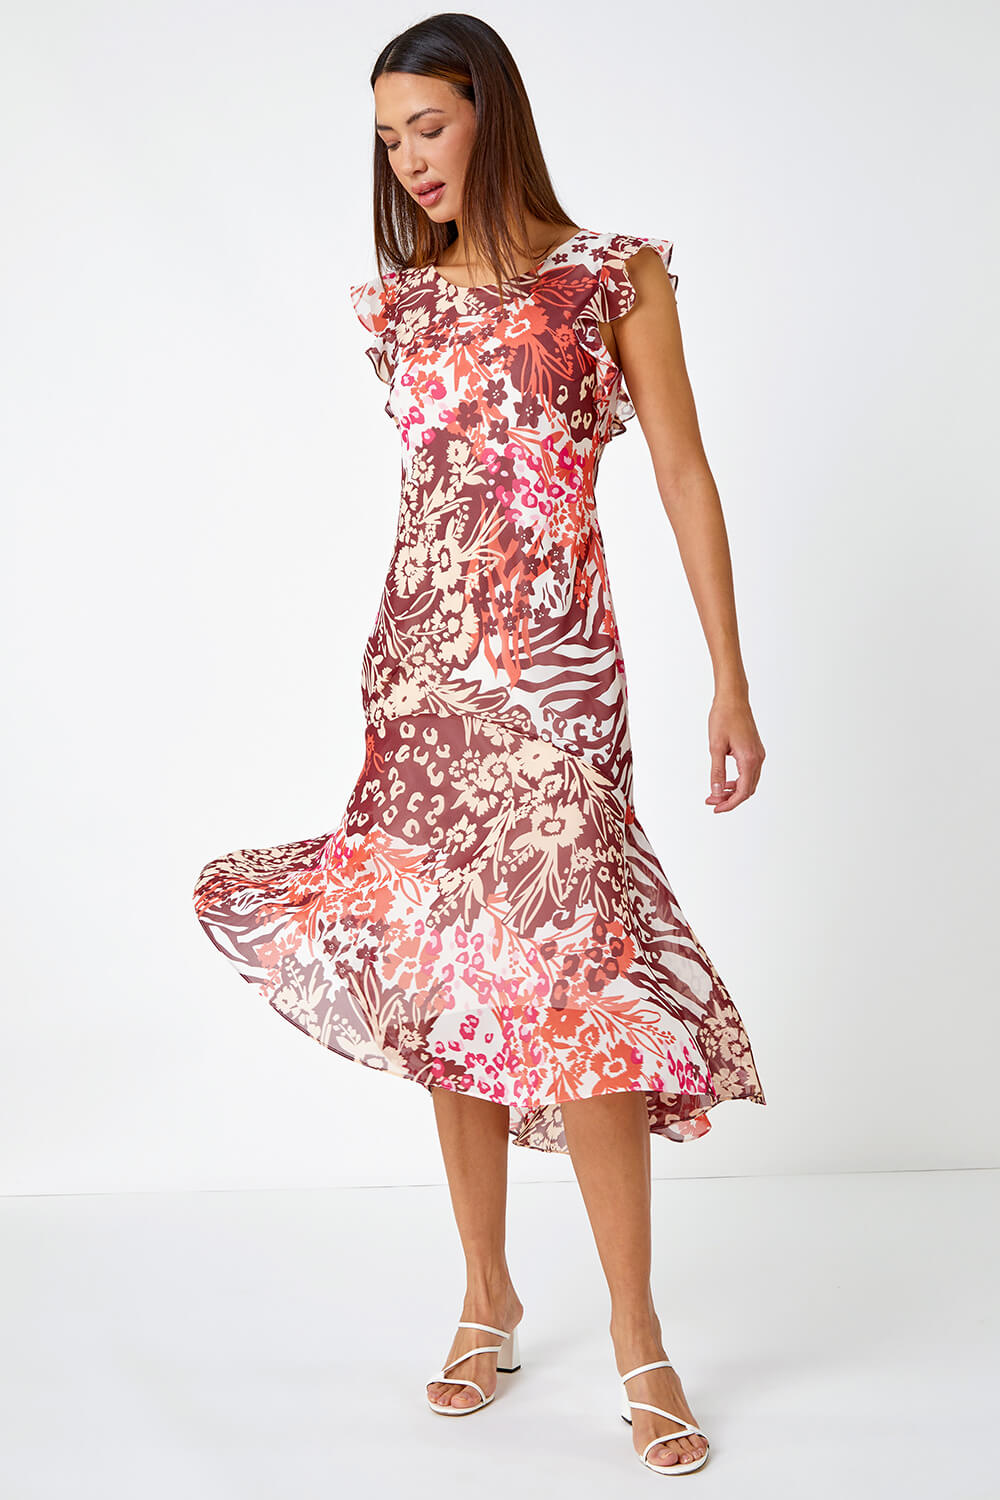 PINK Floral Print Frill Detail Midi Dress, Image 3 of 5